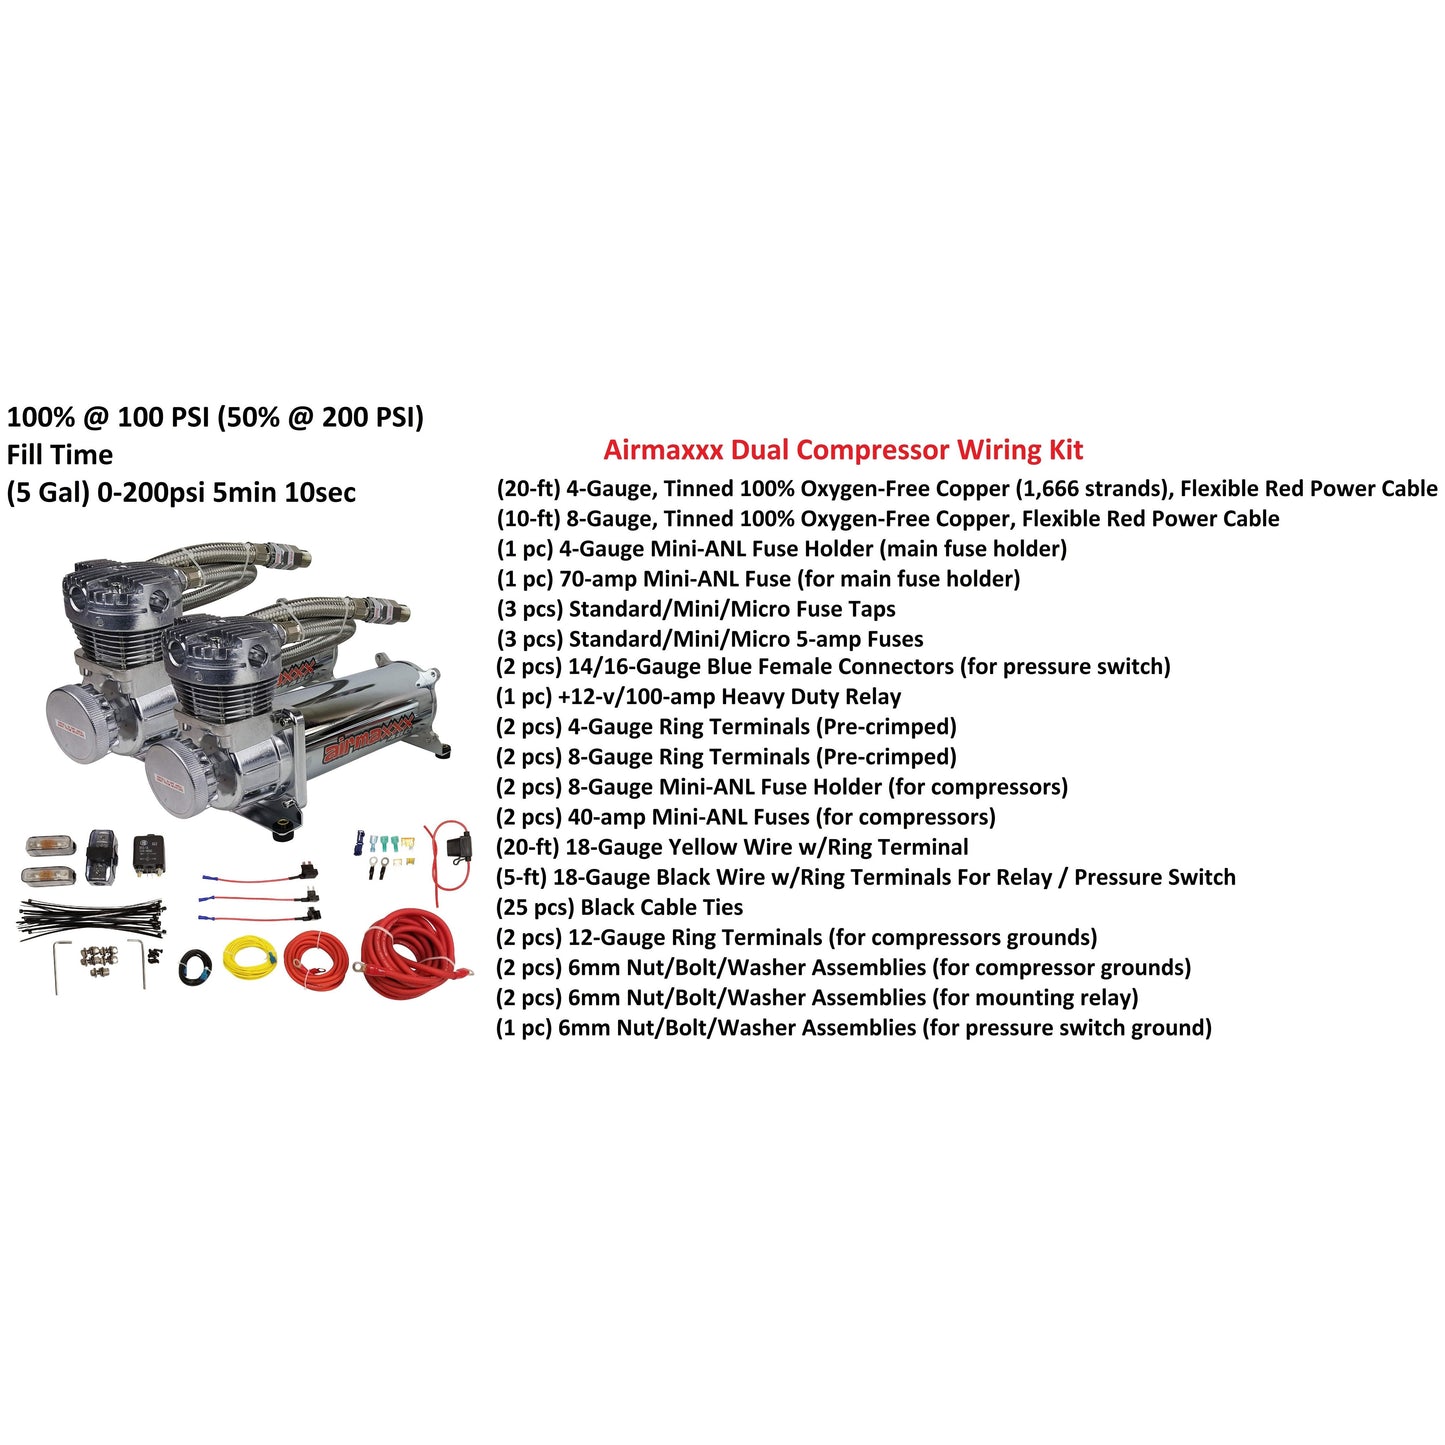 3/8" Complete Plug & Play airmaxxx Air Management System Chrome 480 Compressors